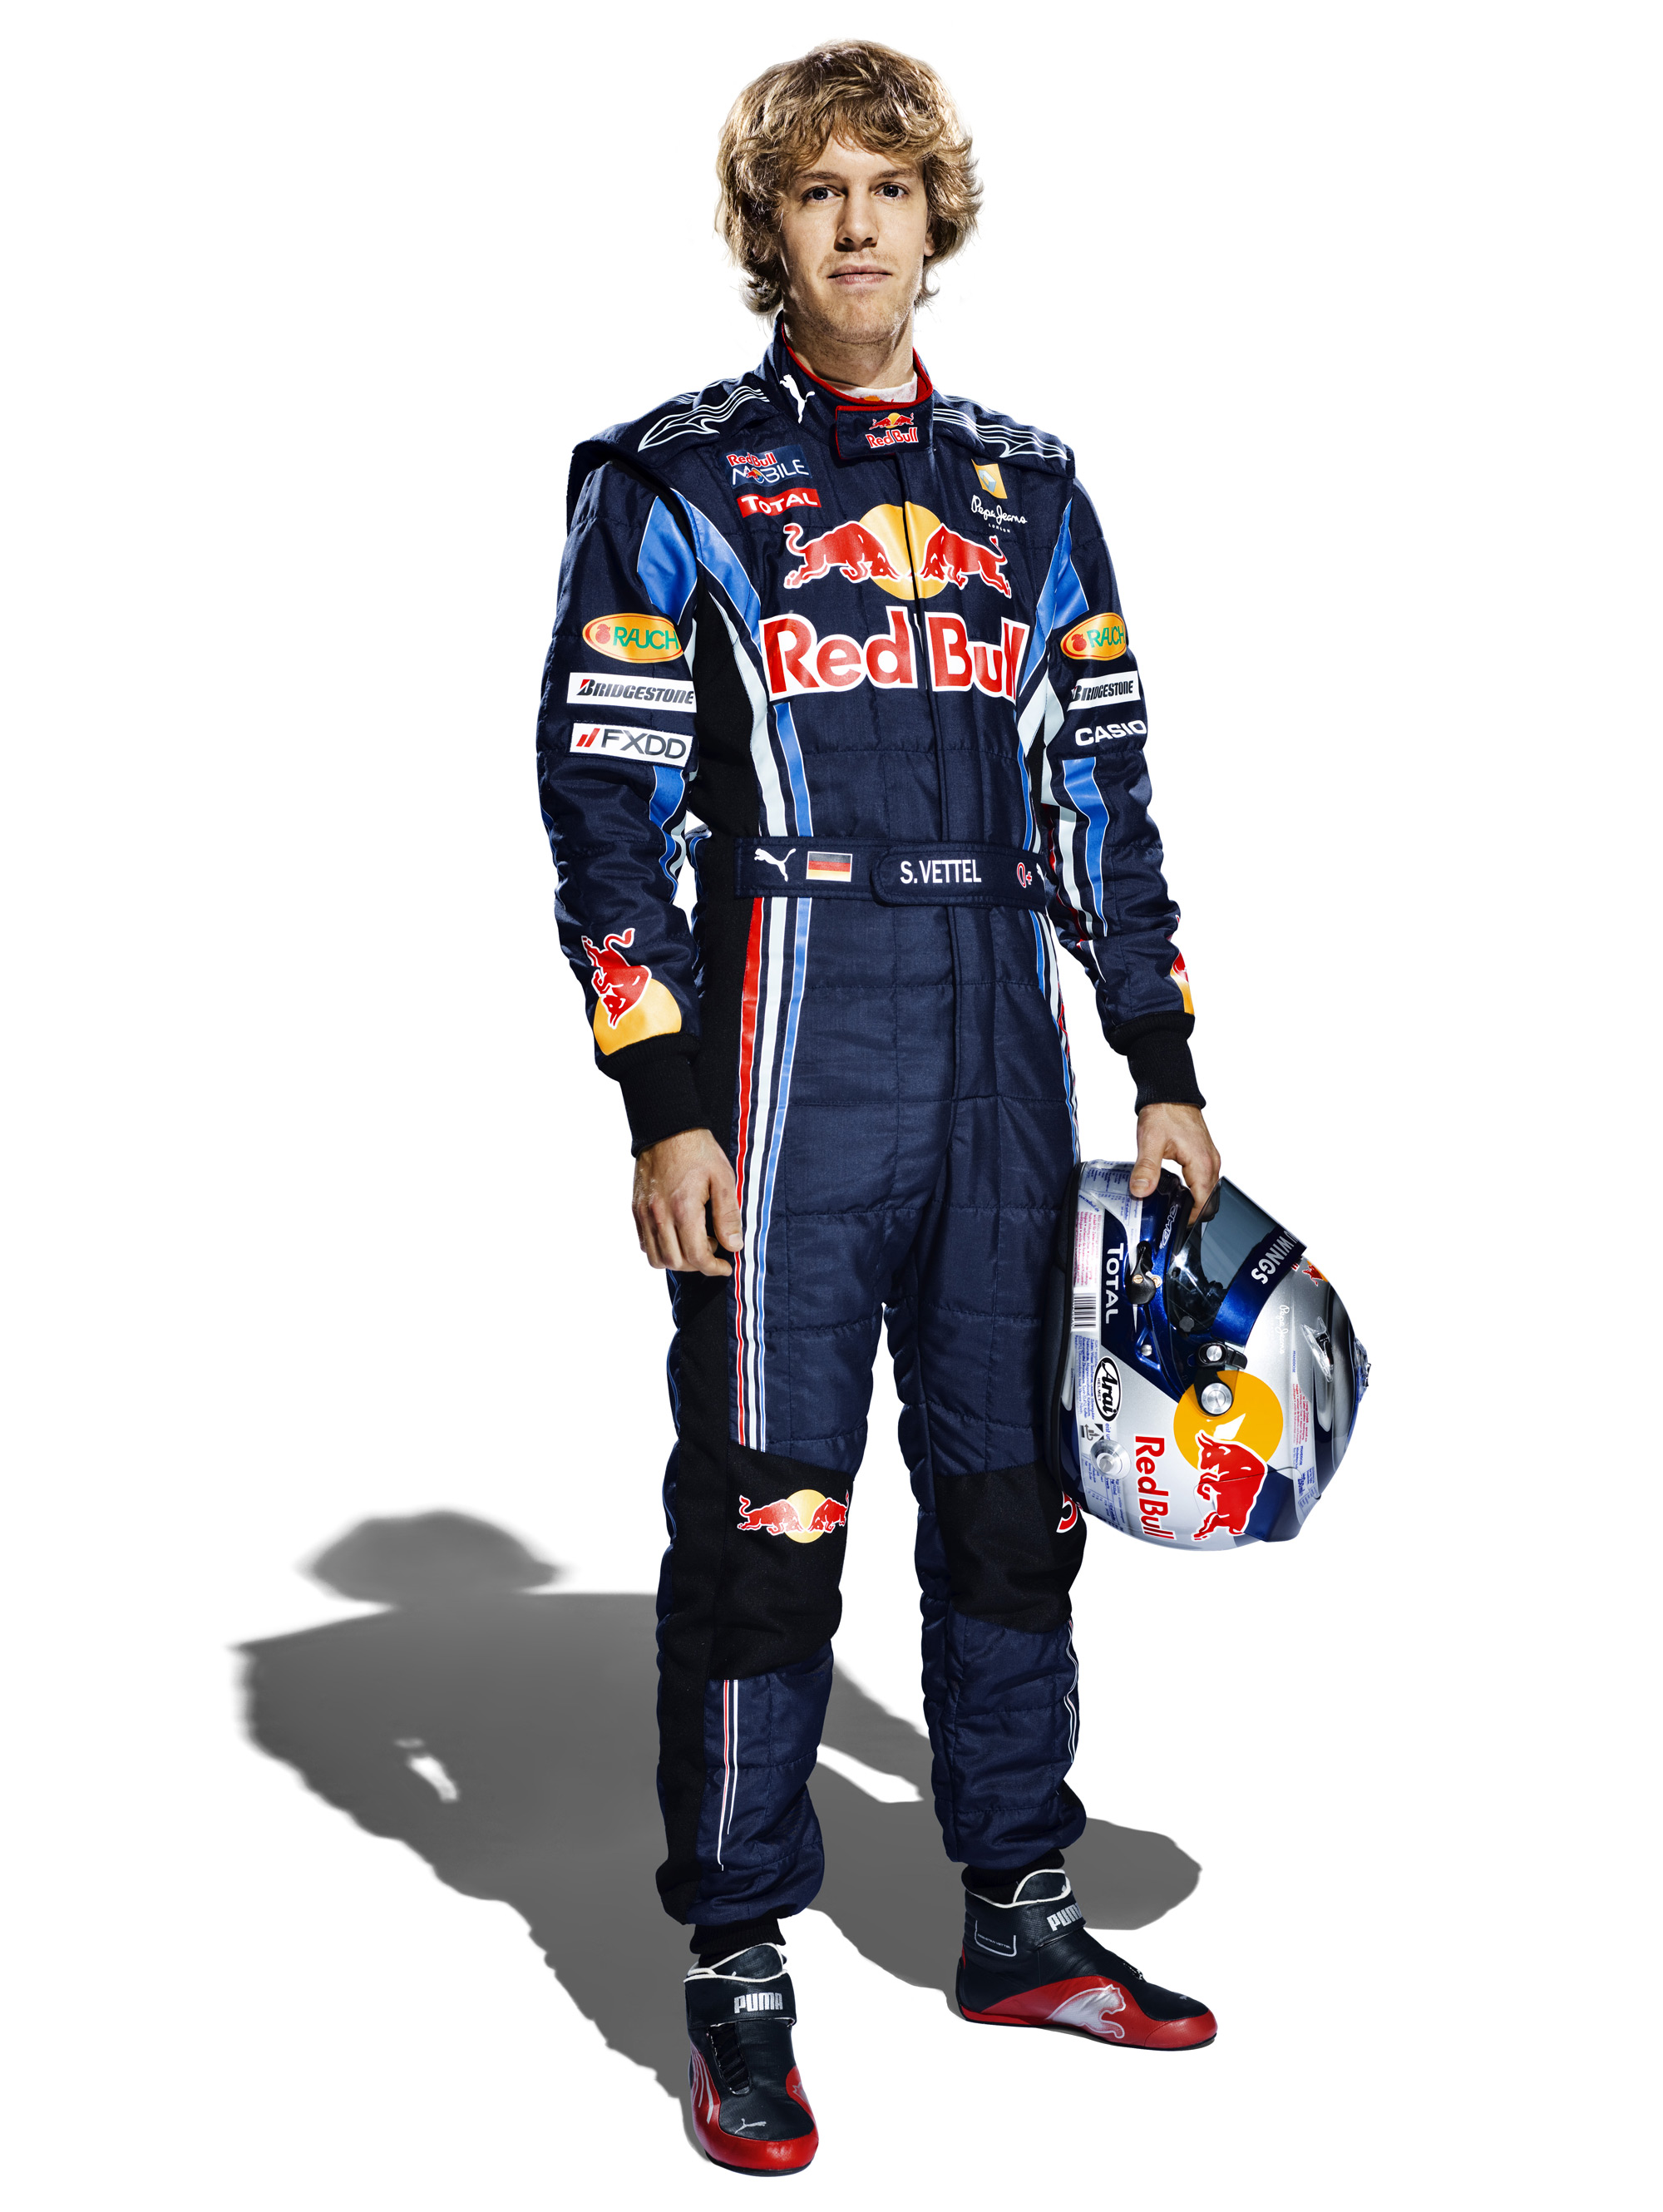 AUSmotive.com » OFFICIAL: Red Bull Racing unveils 2010 F1 car